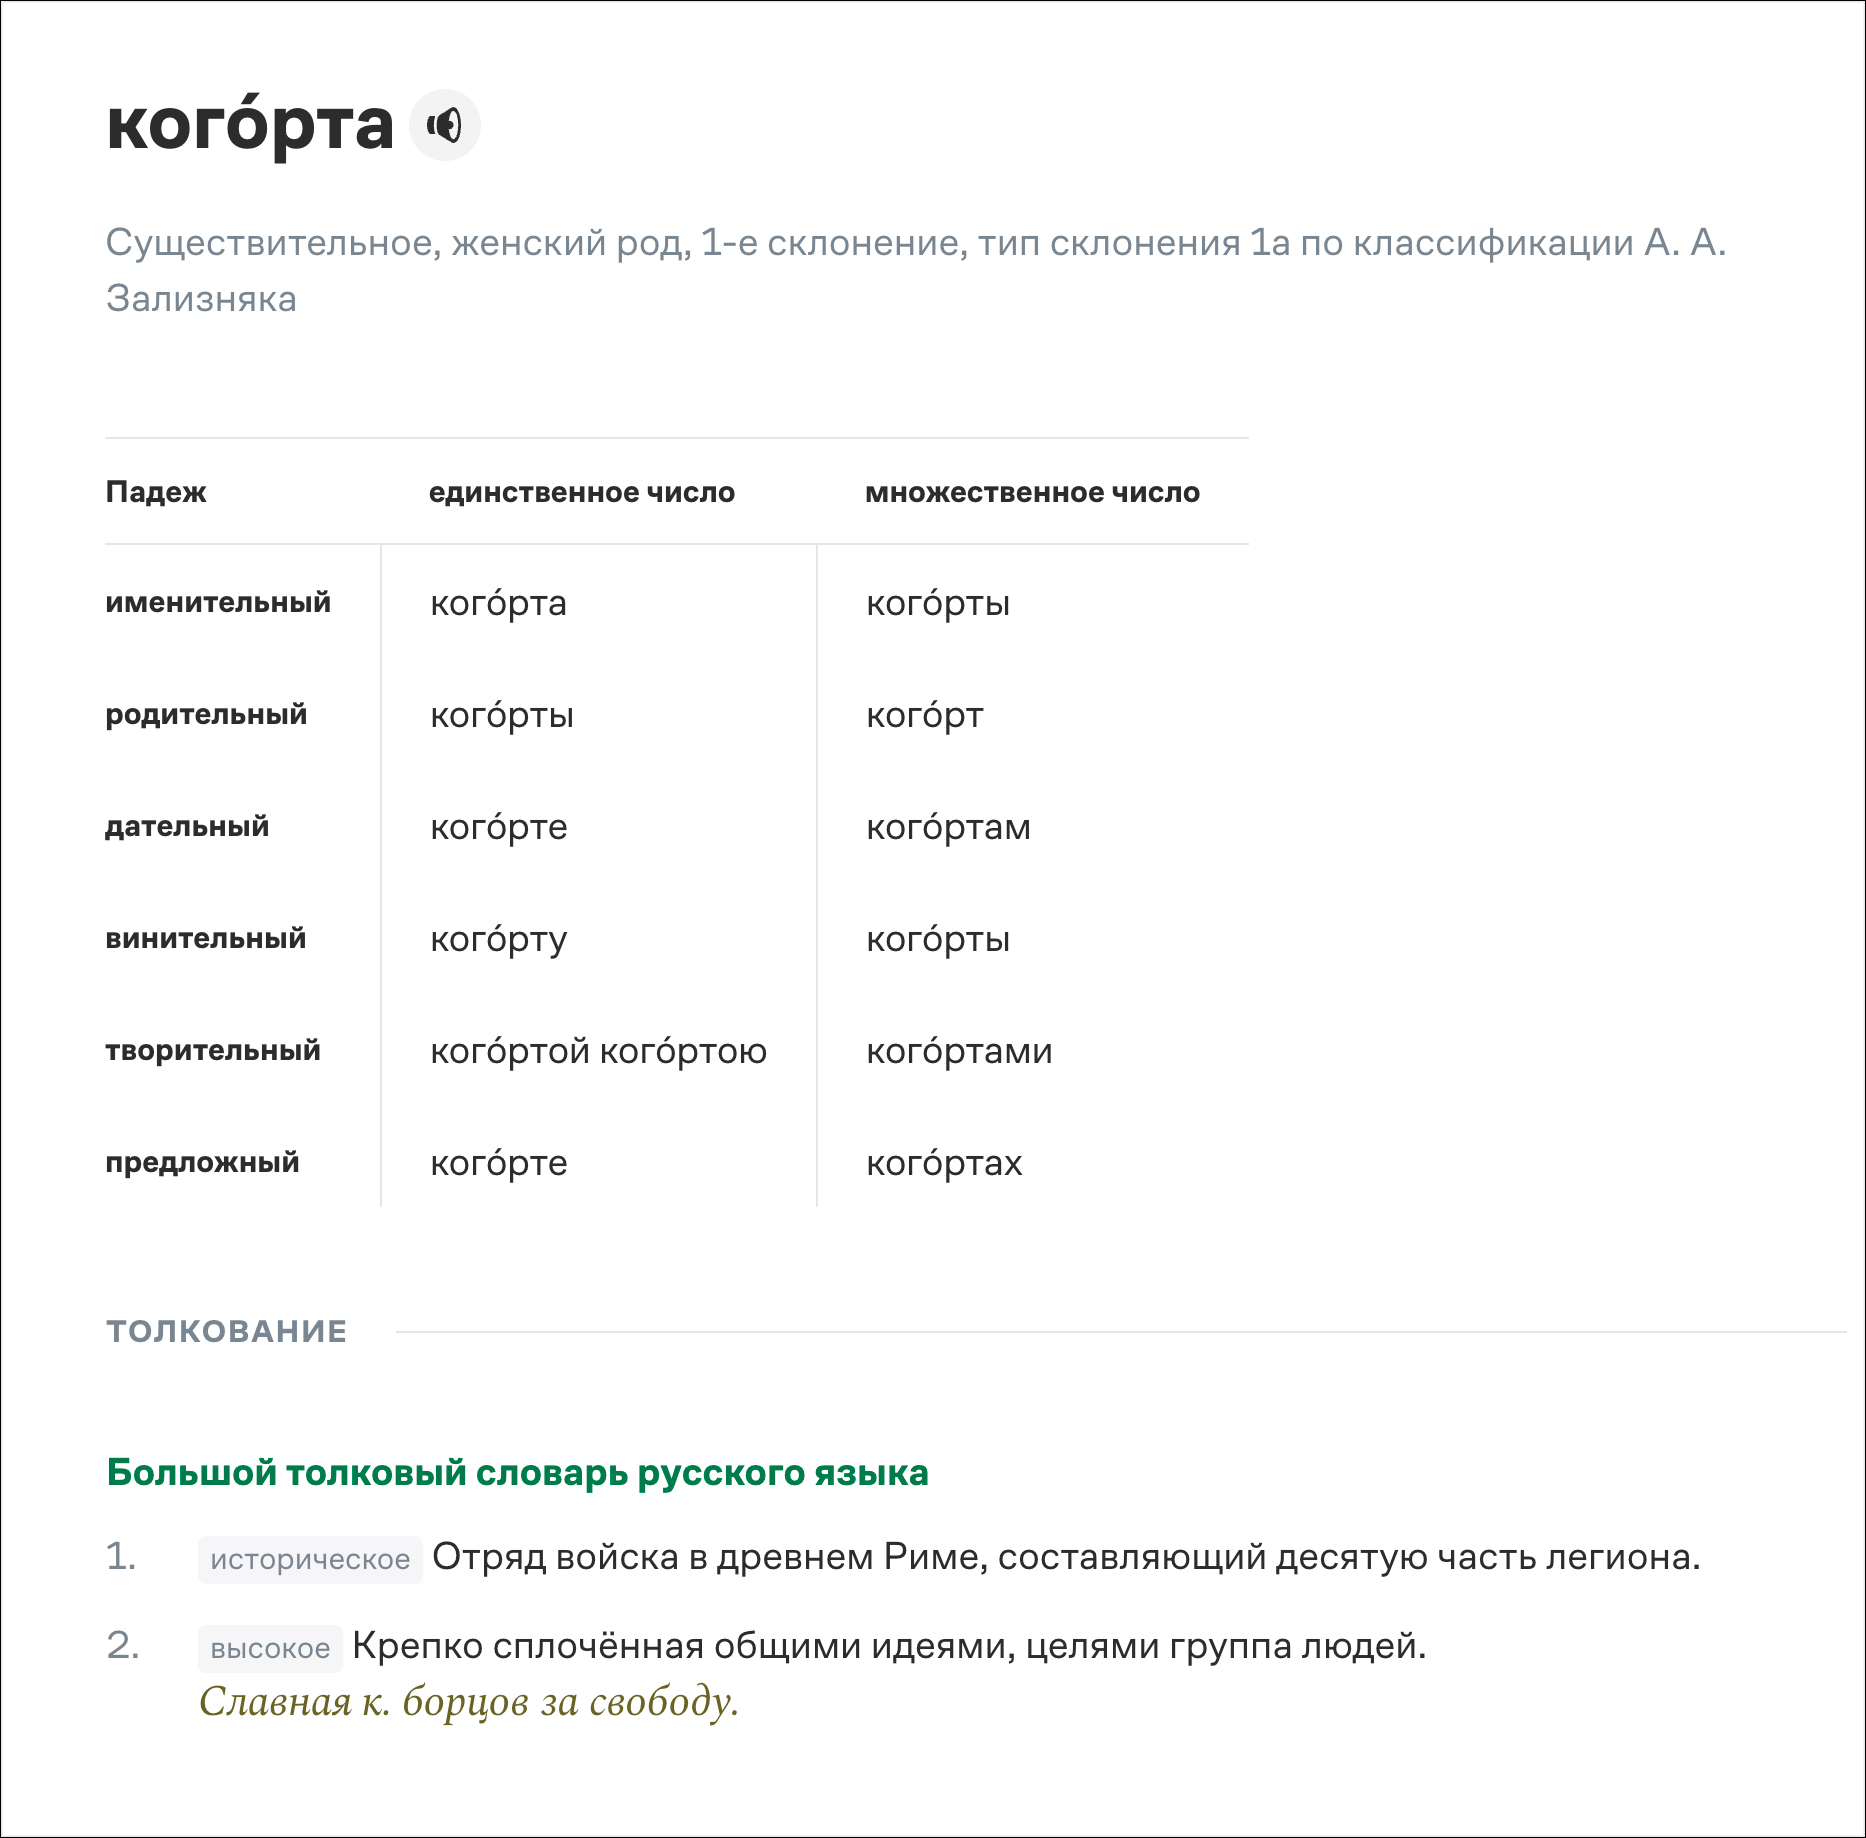 Сайт gramota.ru испорчен при усовершенствовании